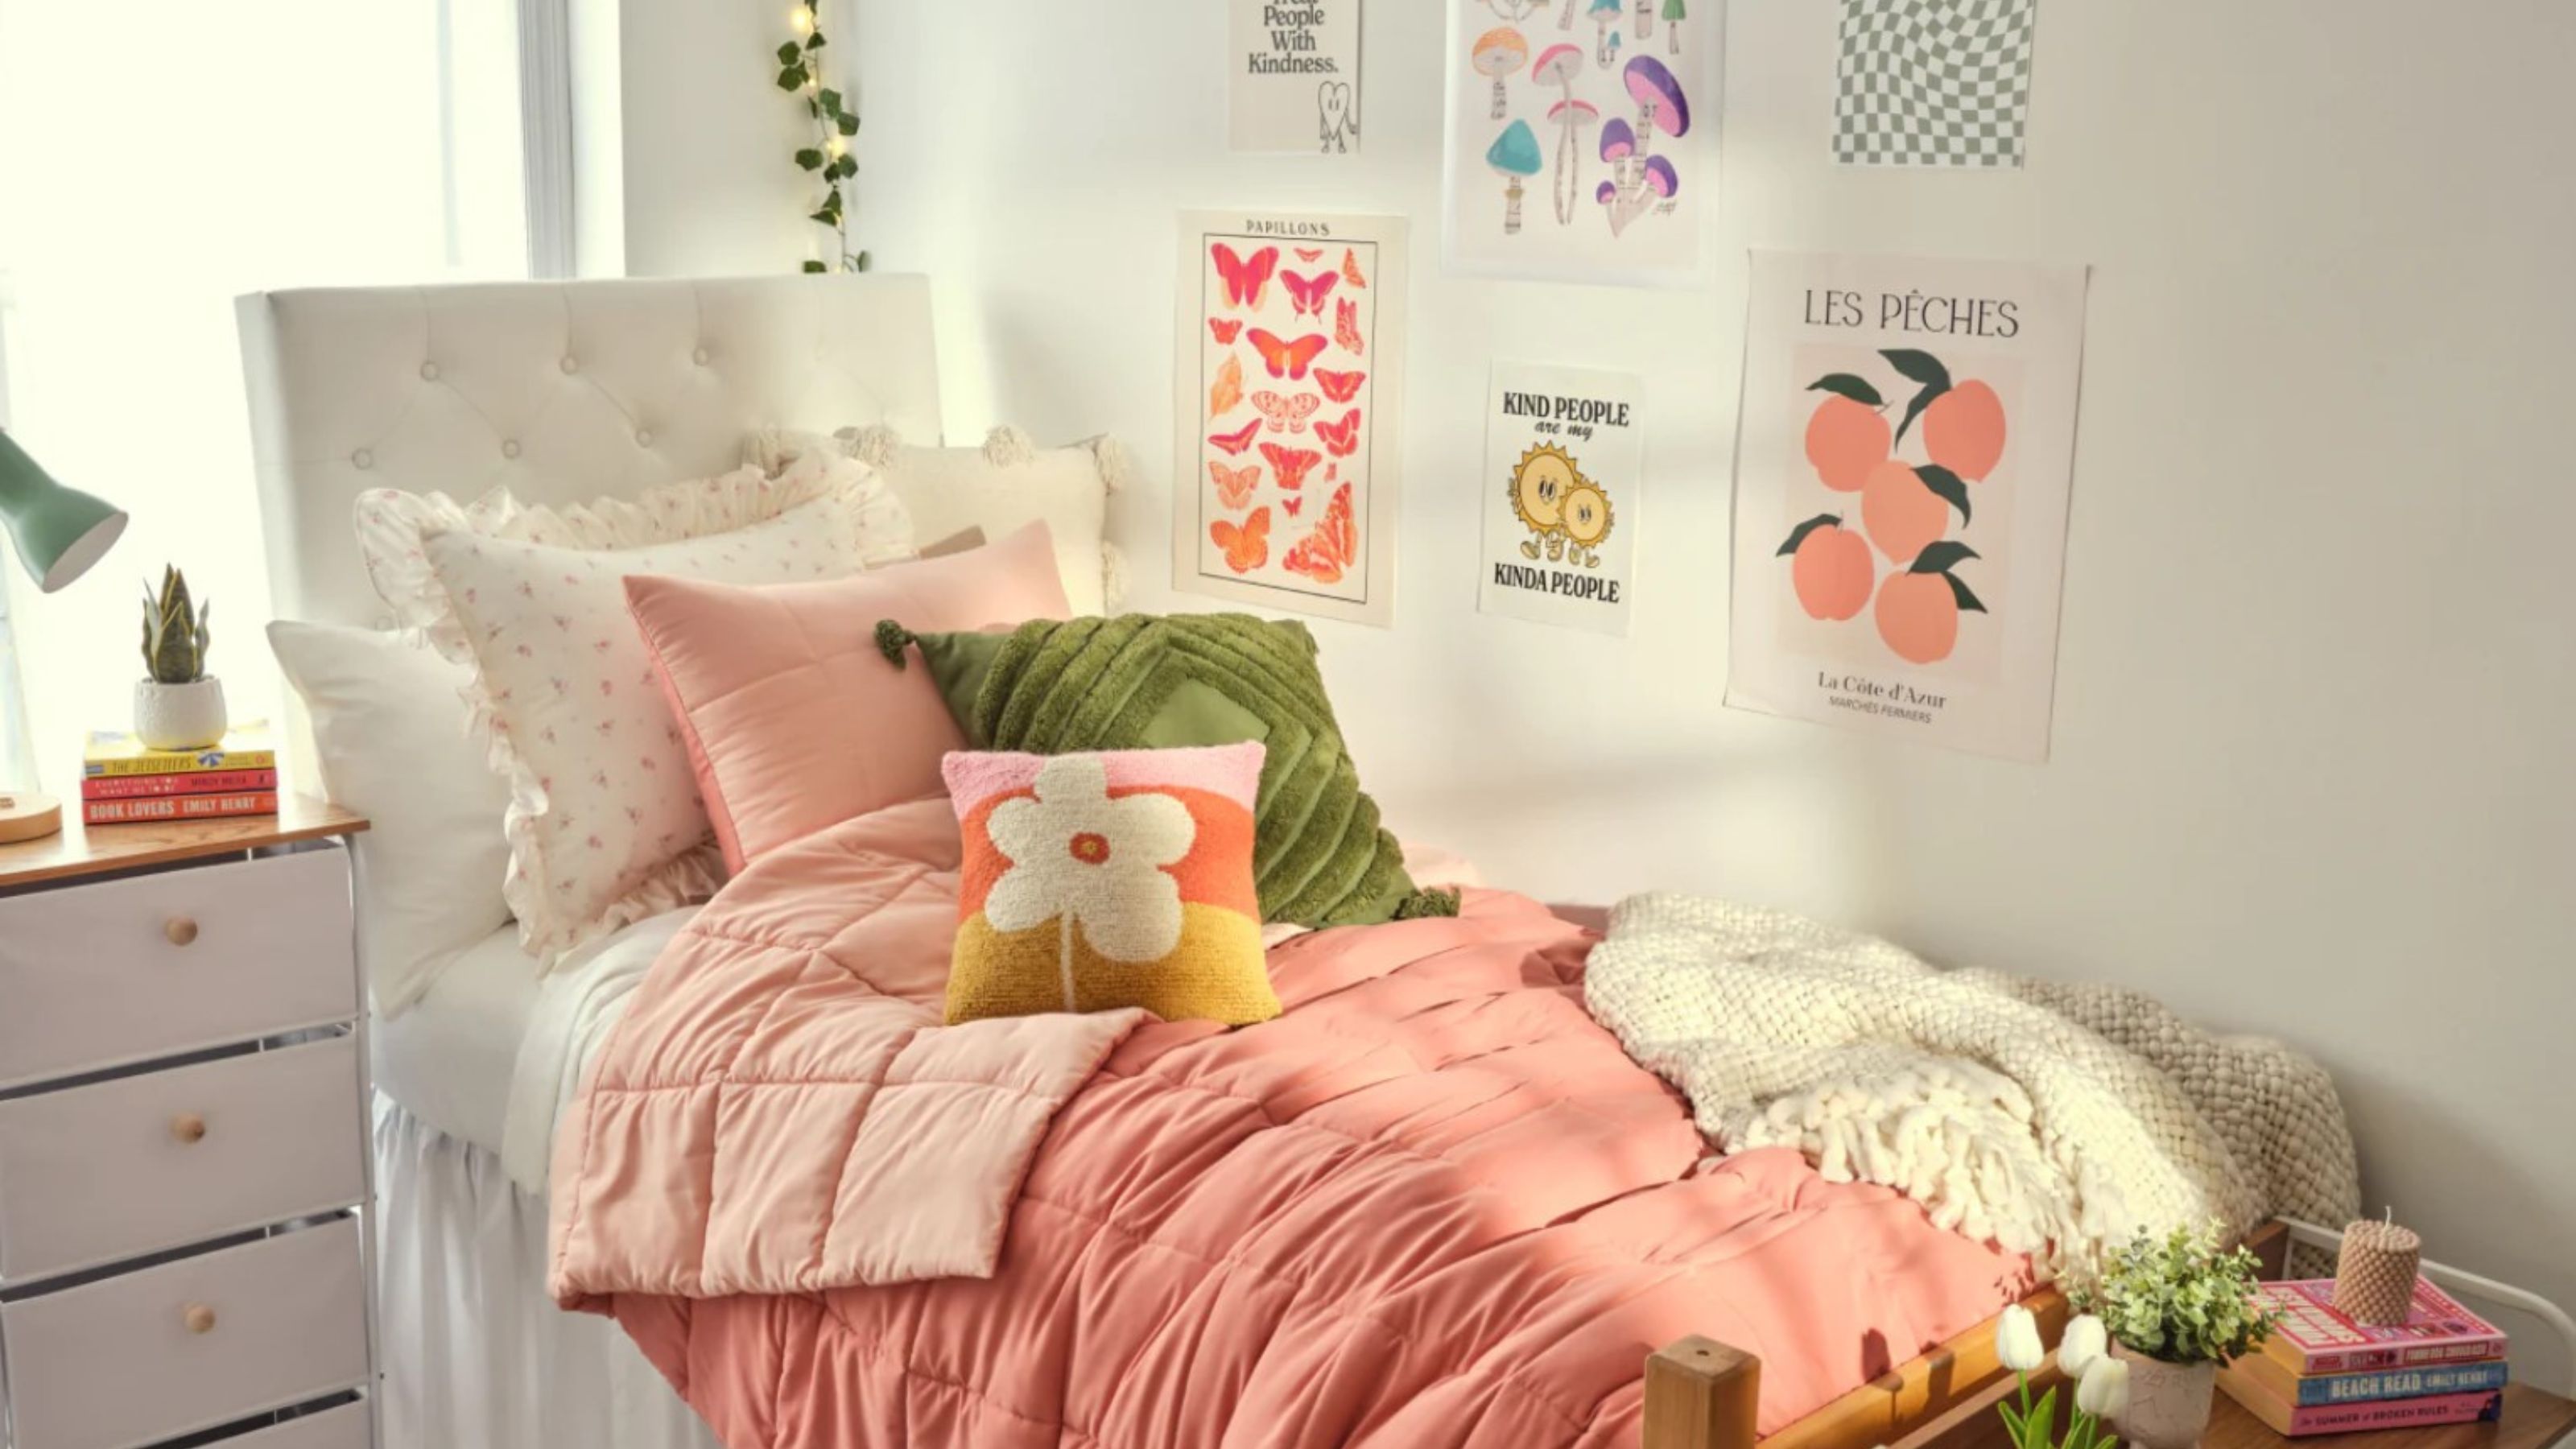 Storage Tips for Under Your Bed  Dorm room designs, College dorm room  decor, Dorm room storage